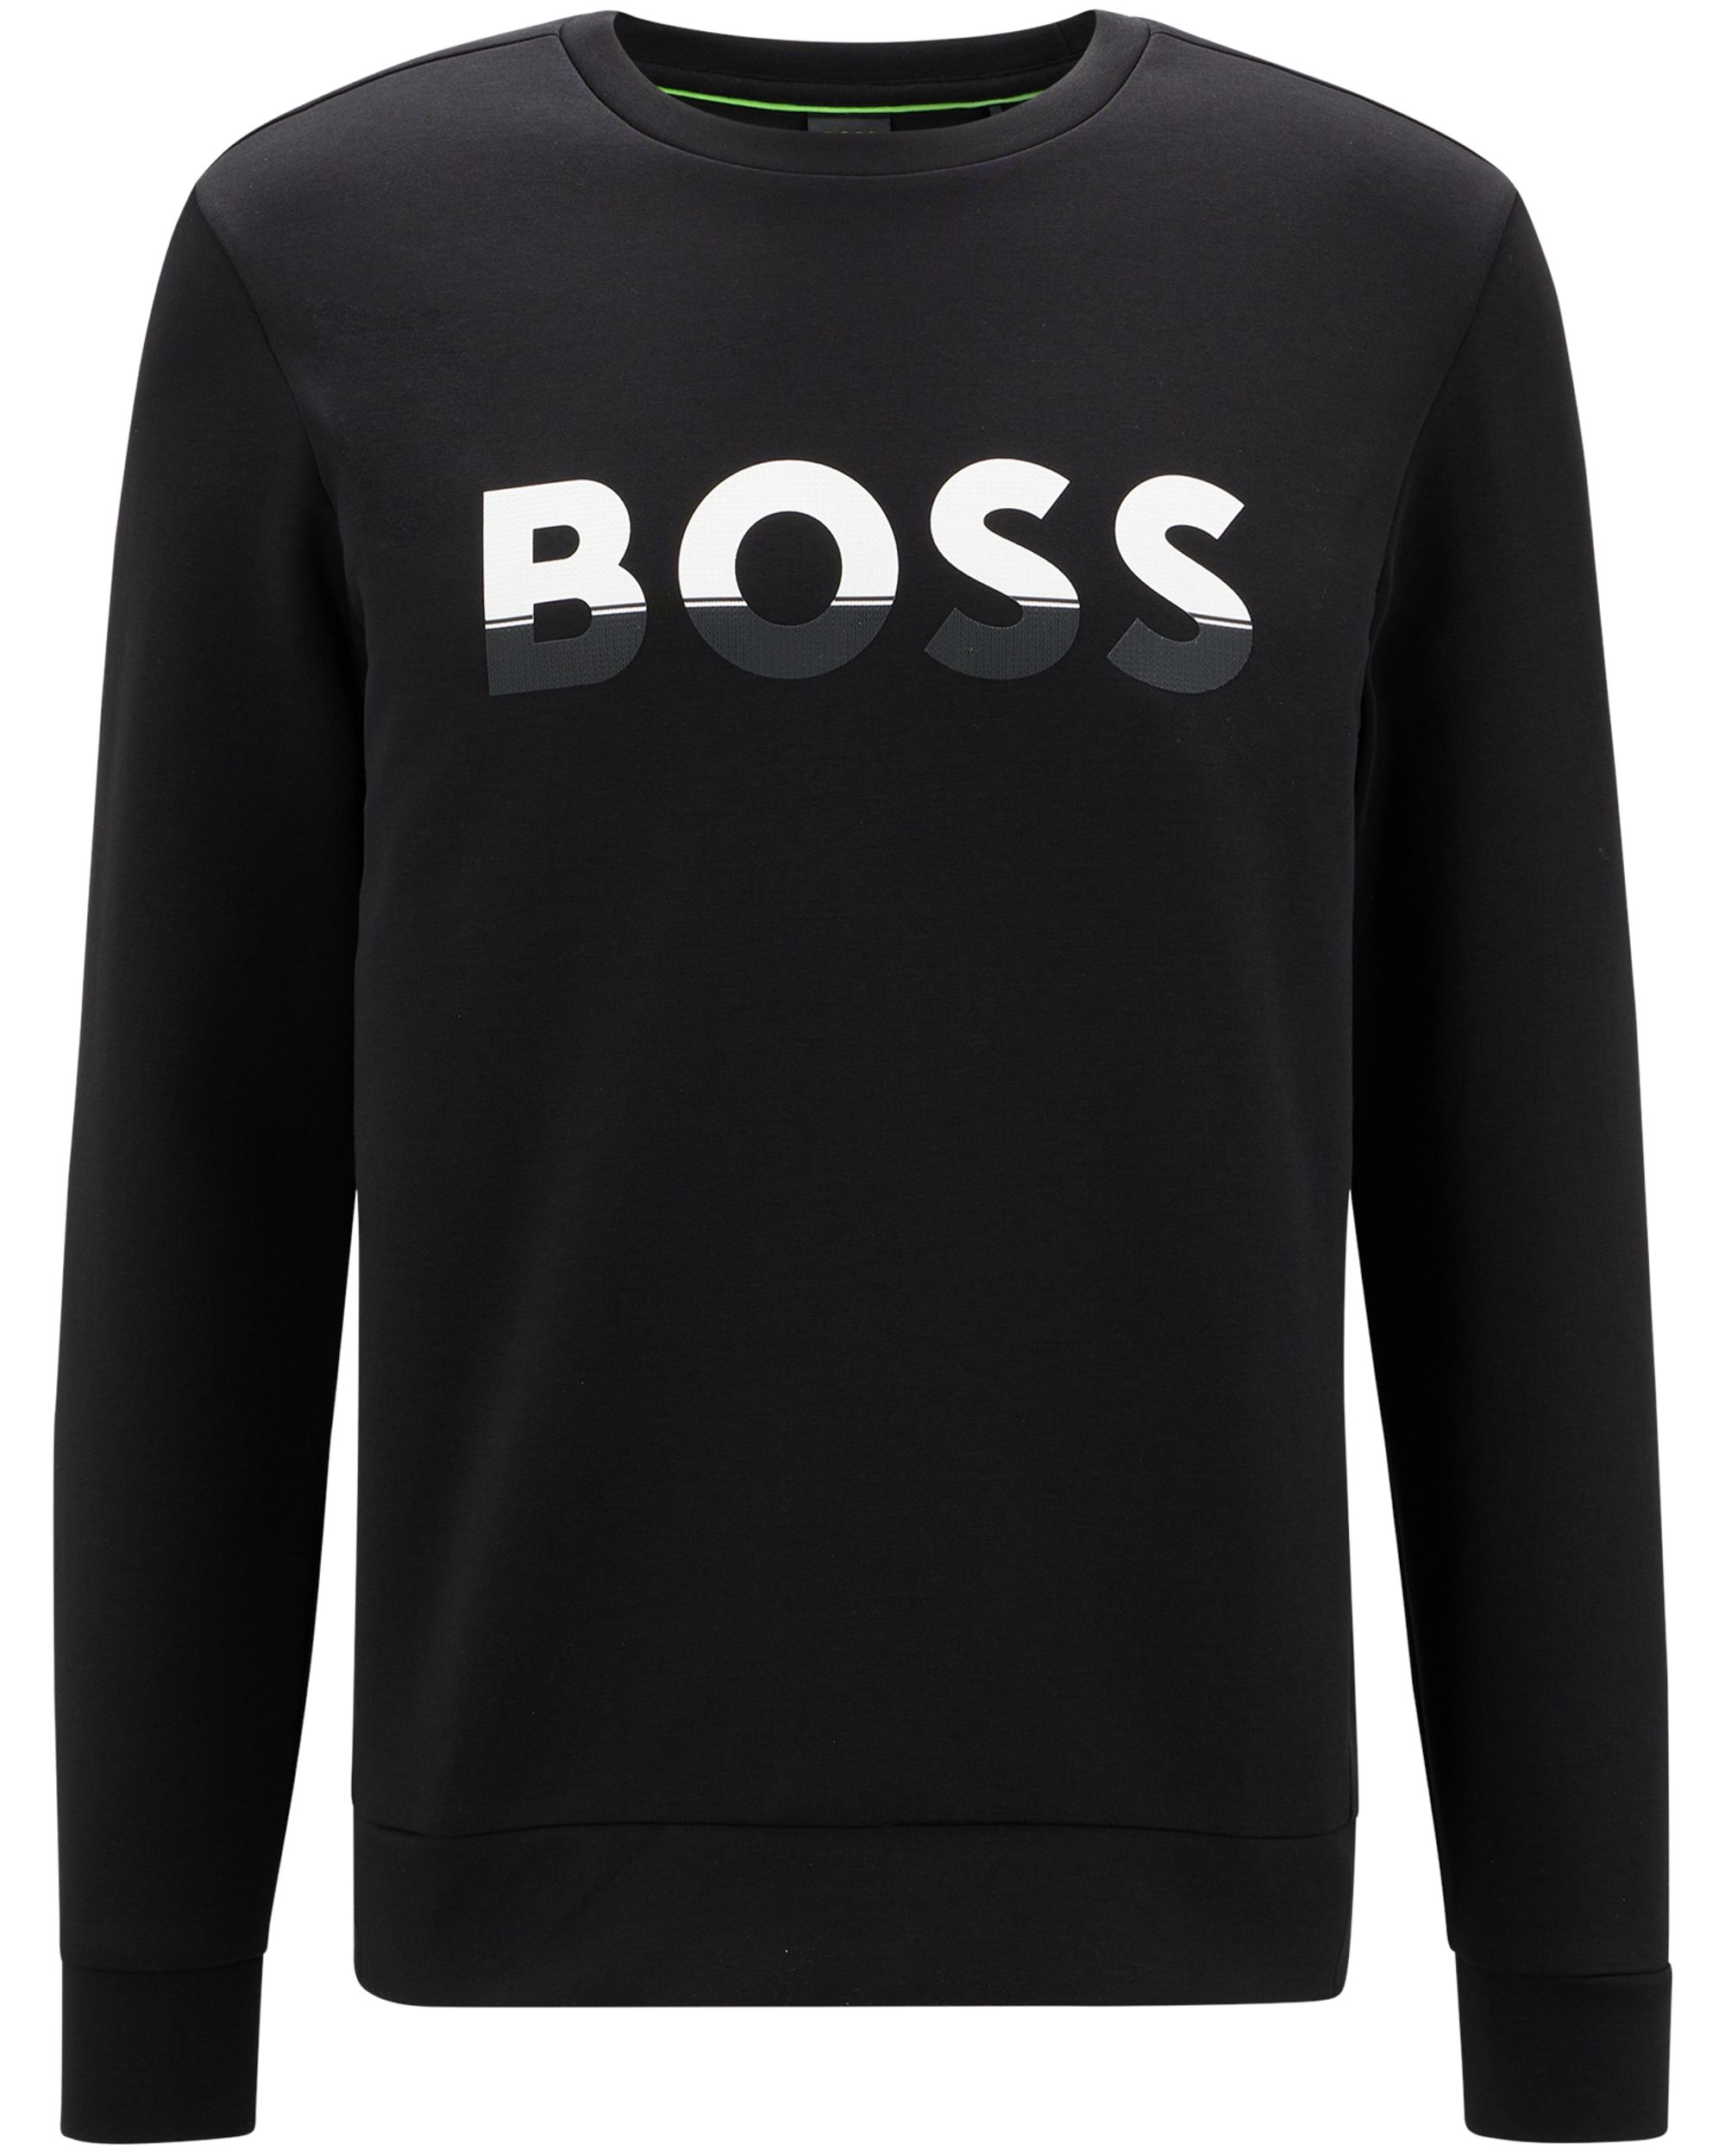 Hugo Boss Leisure Salbo 1 Sweater Zwart 082304-001-L